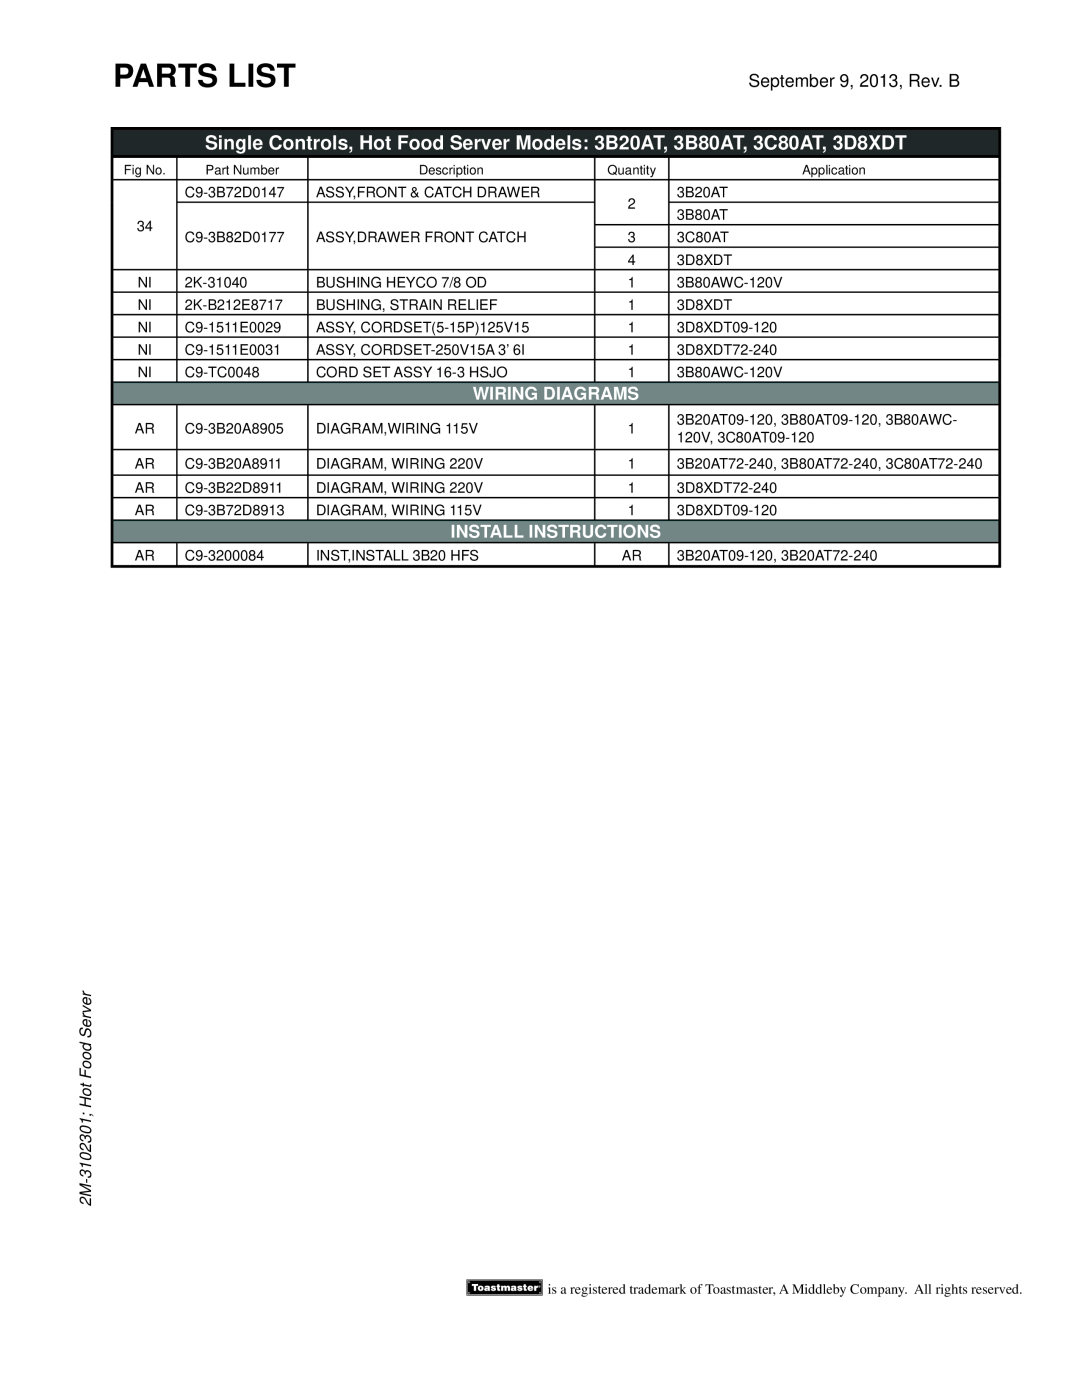 Toastmaster 3B84D, 3C84A, 3B20A, 3C80A, 3A20A Parts List, September 9, 2013, Rev. B, Wiring Diagrams, Install Instructions 